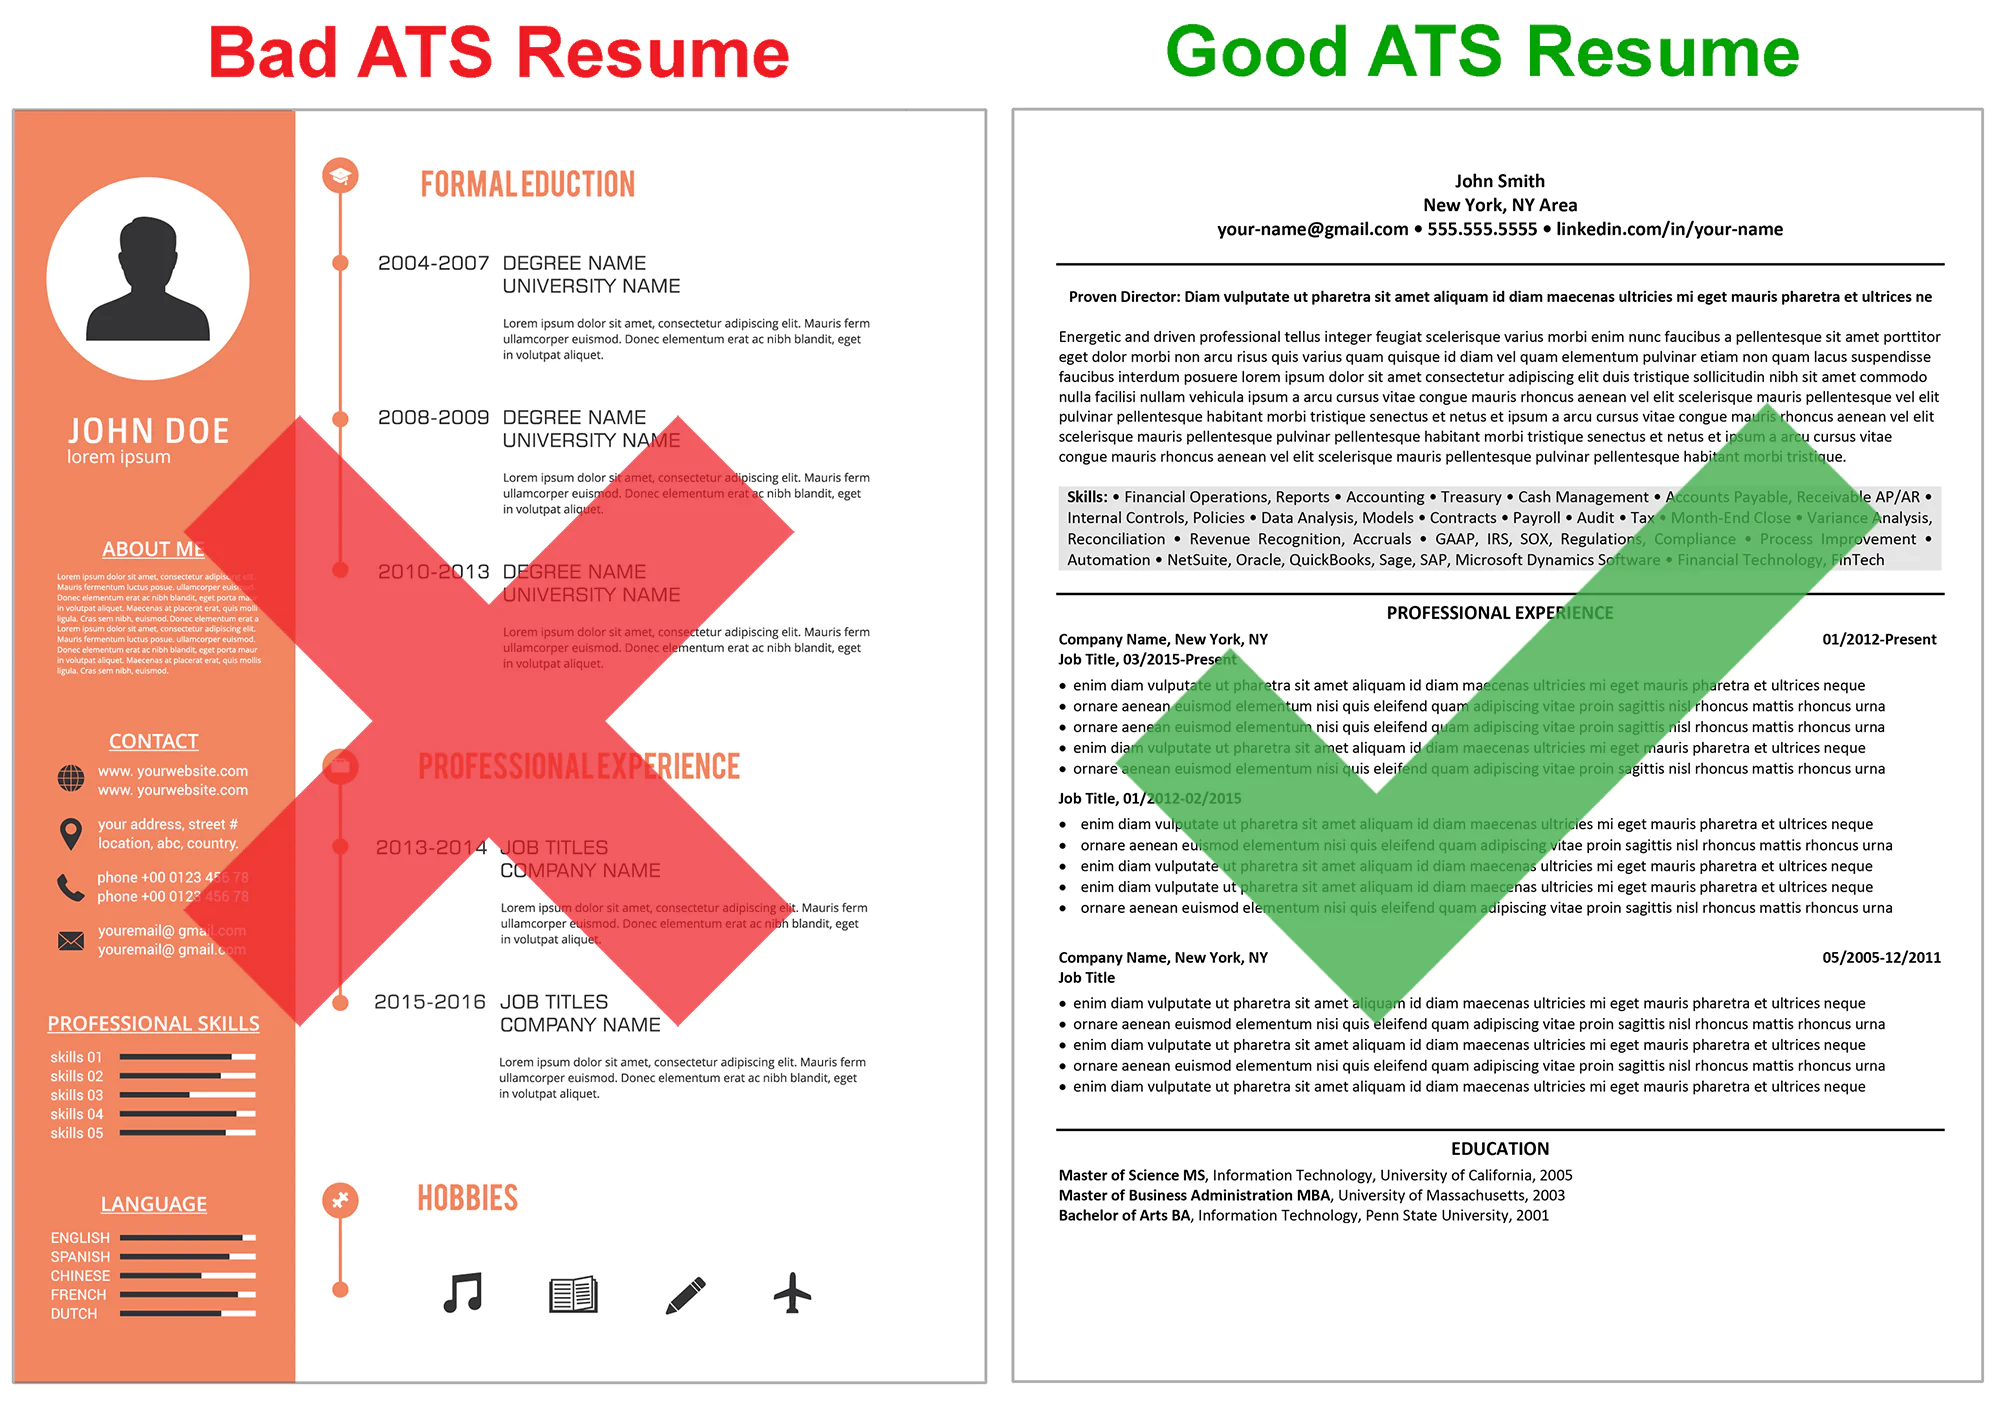 Good Vs Bad ATS Resume Examples